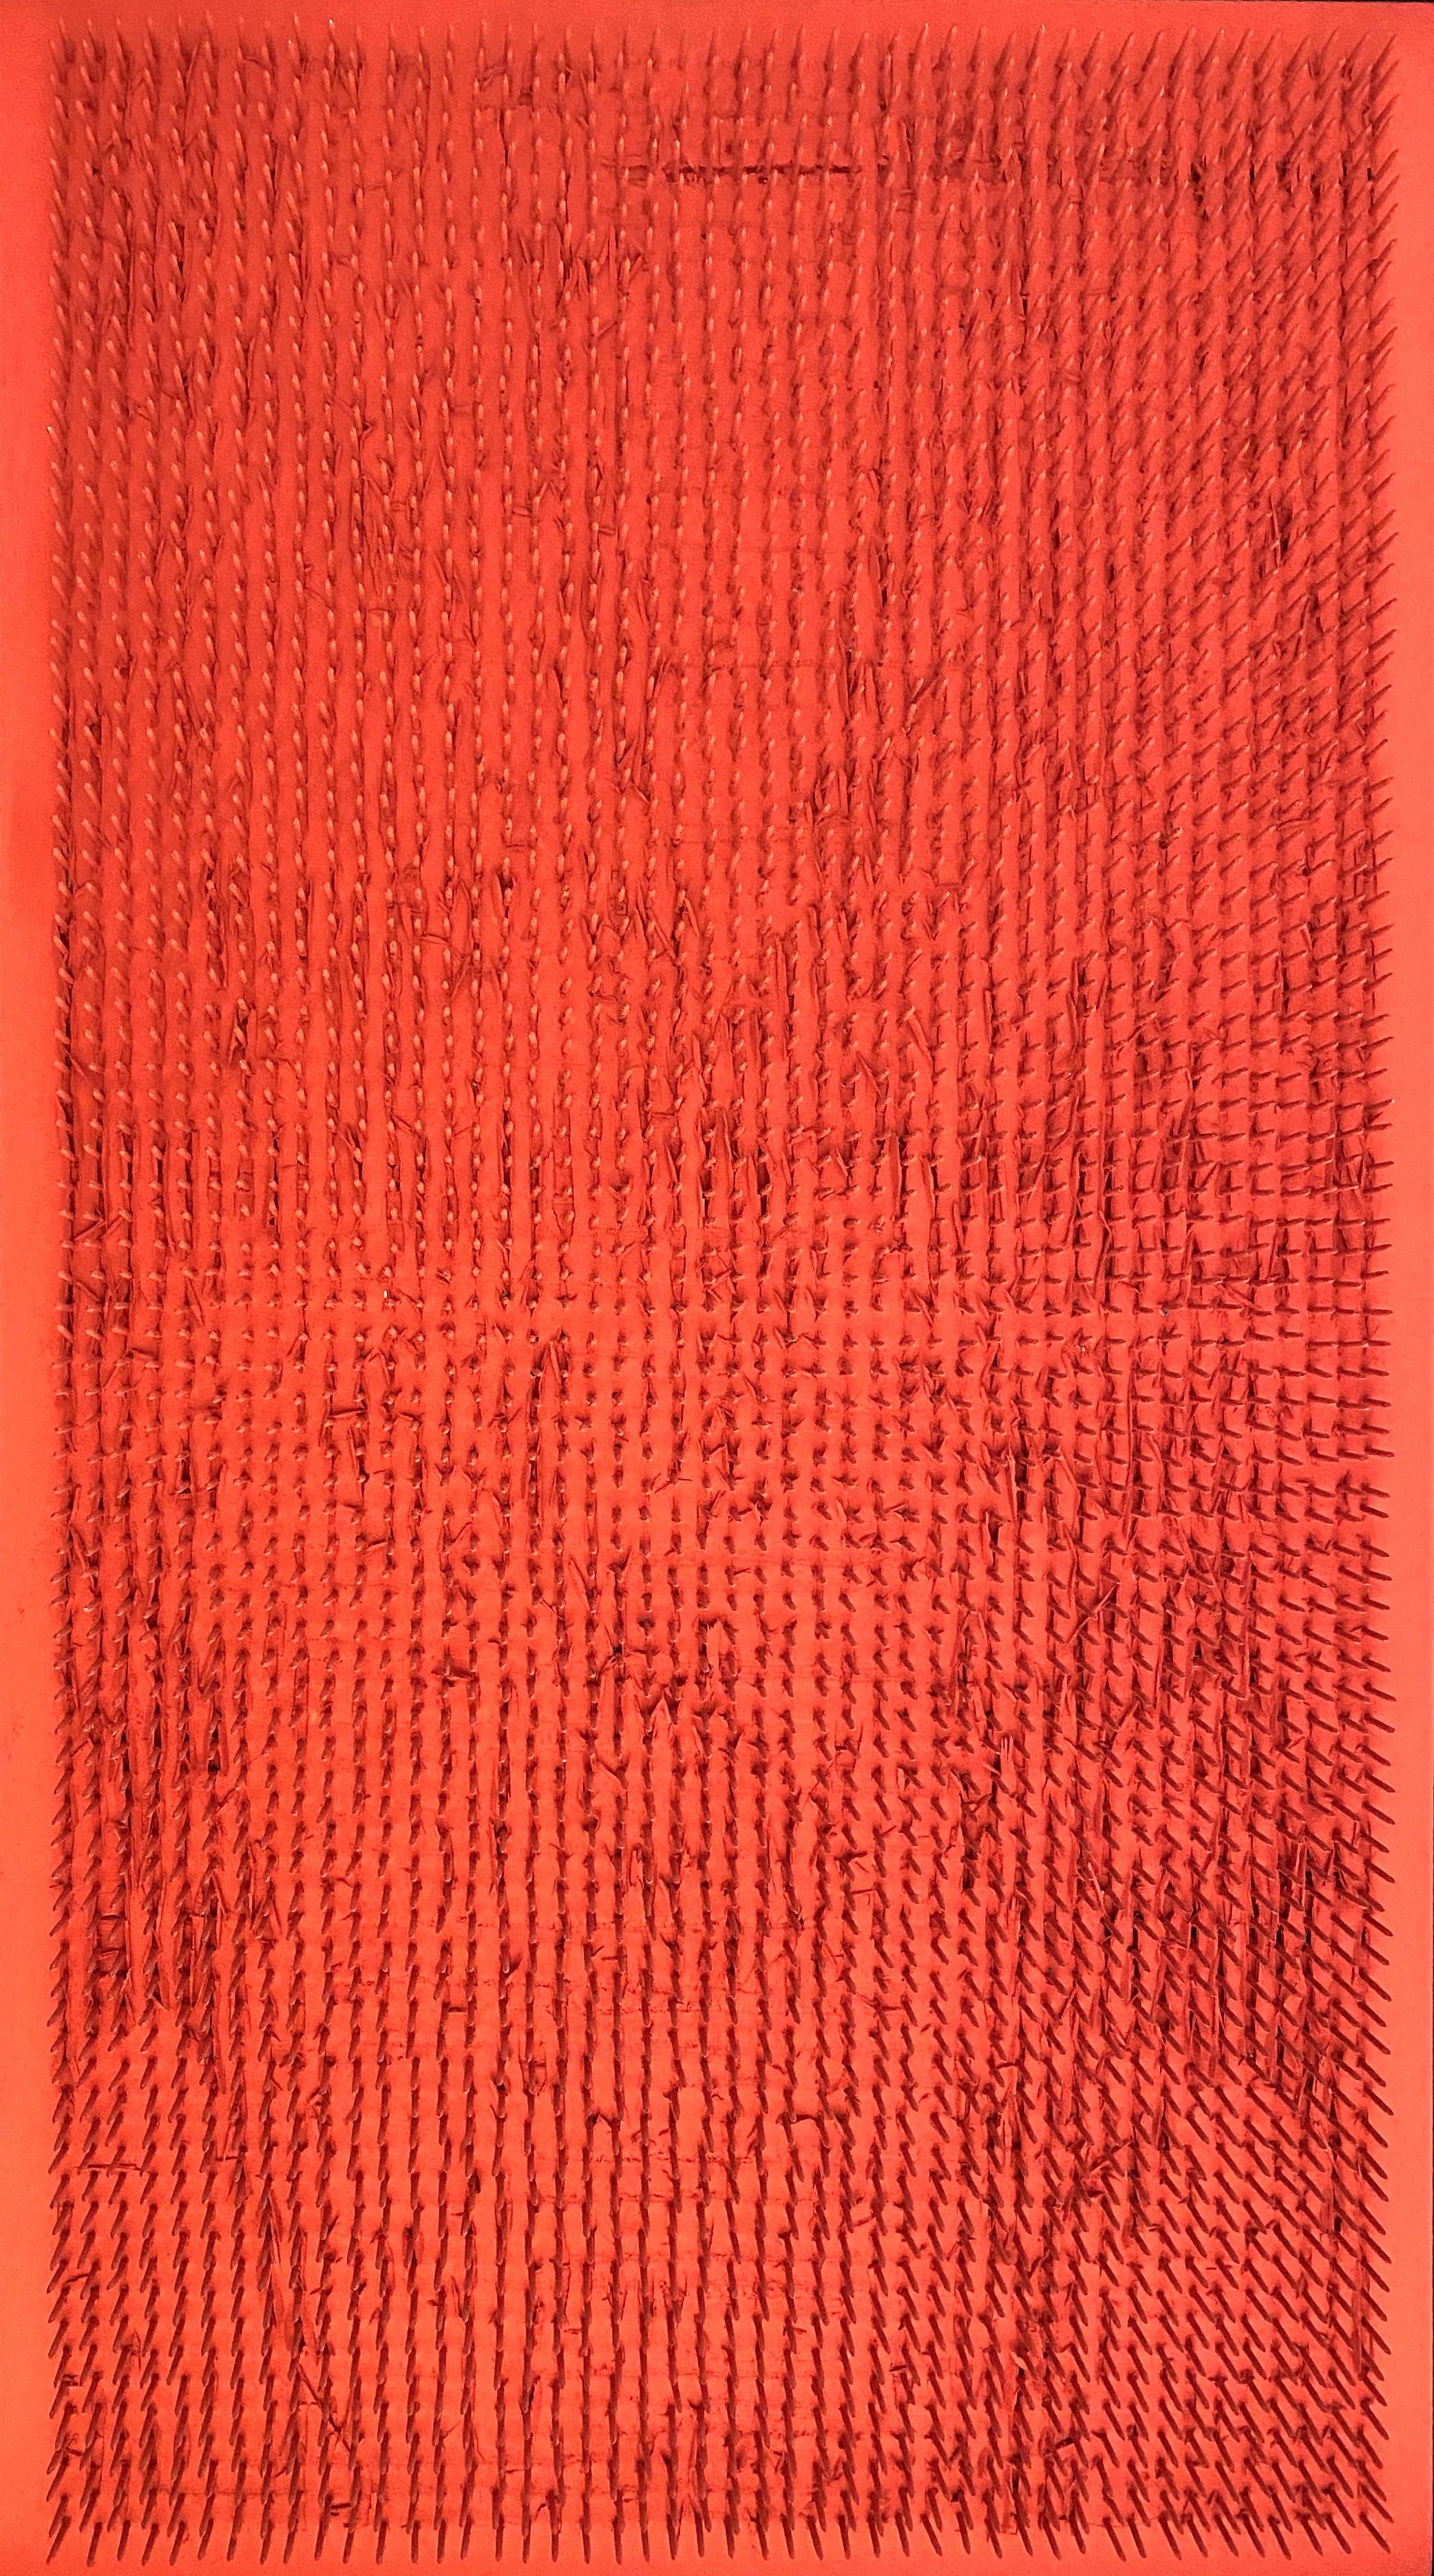 Tableau clou, 1969, red, nails, wood, Avantgarde, Group Zero, light, object - Mixed Media Art by Bernard Aubertin